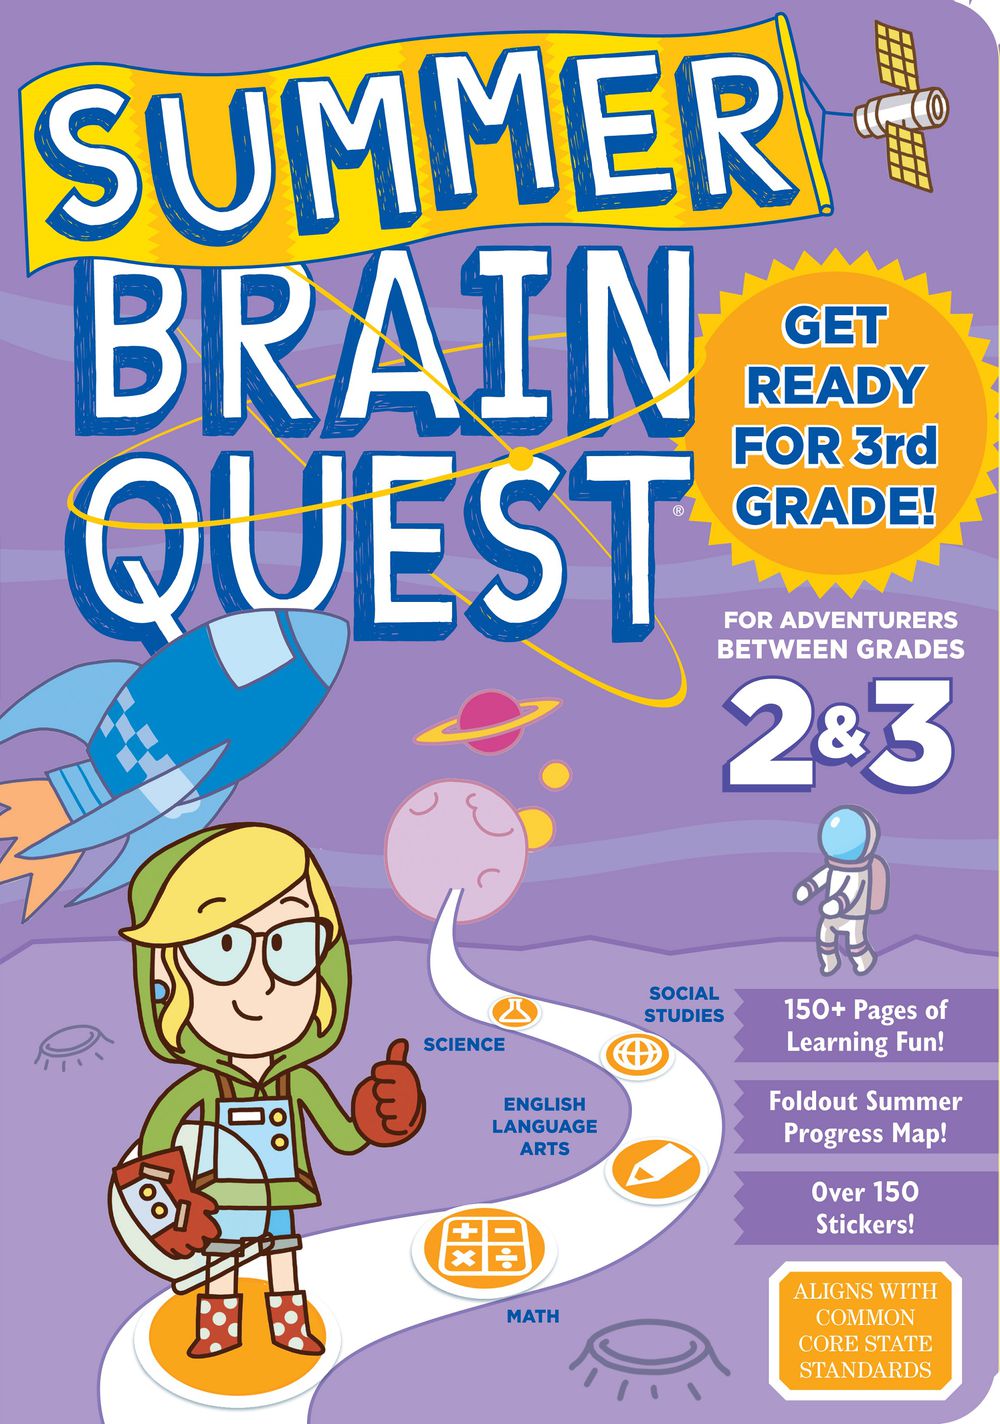 Summer Brain Quest－Between Grades 2 & 3